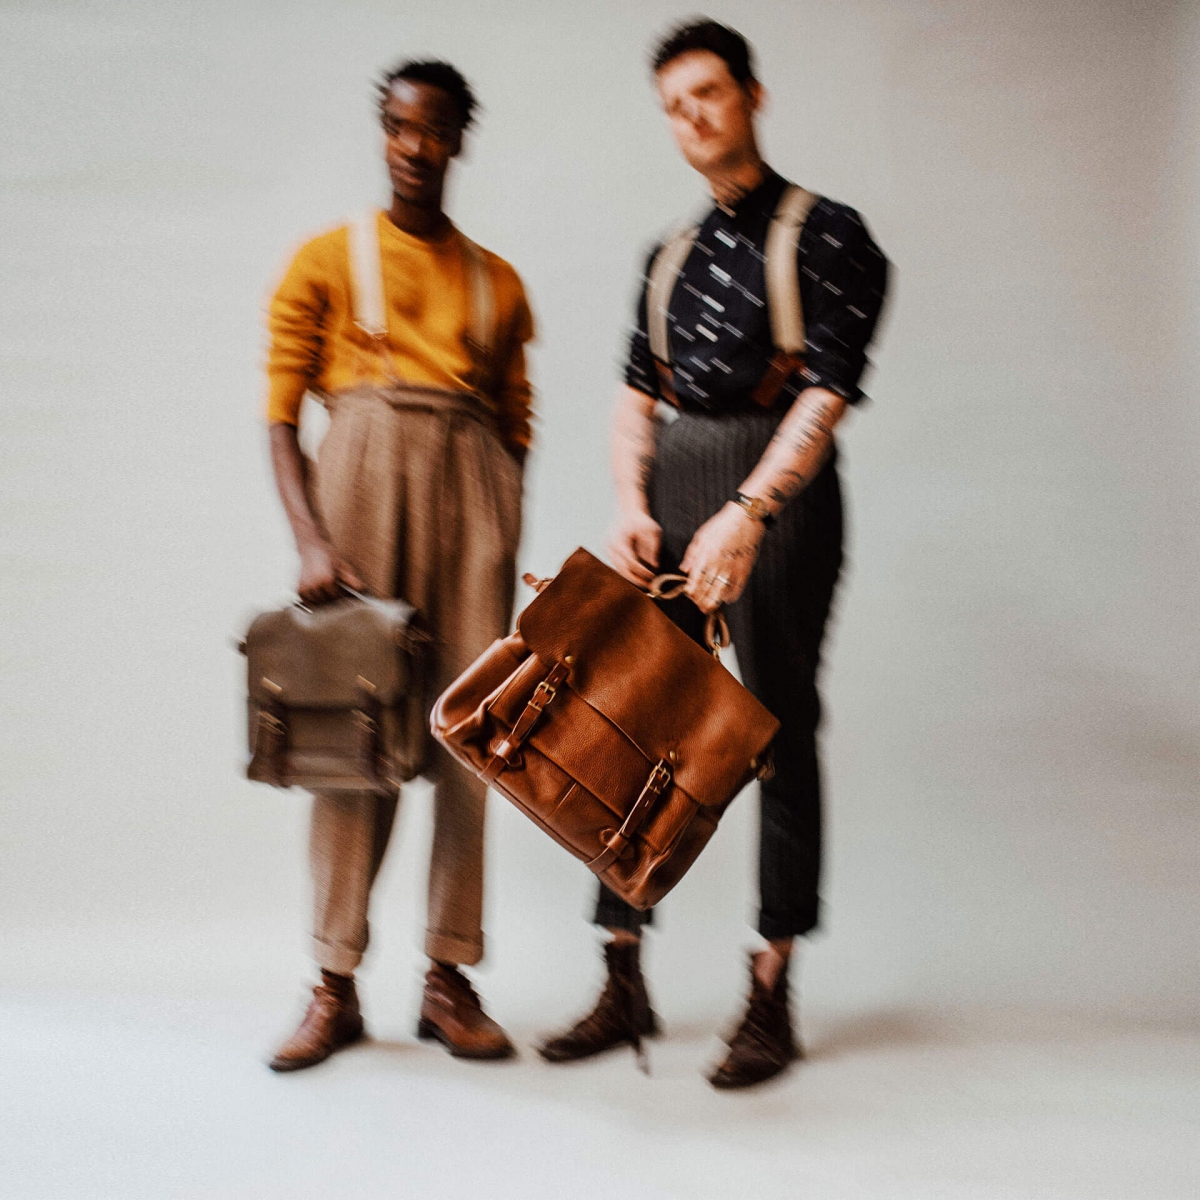 BLEU DE CHAUFFE Full-Grain Leather Weekend Bag for Men